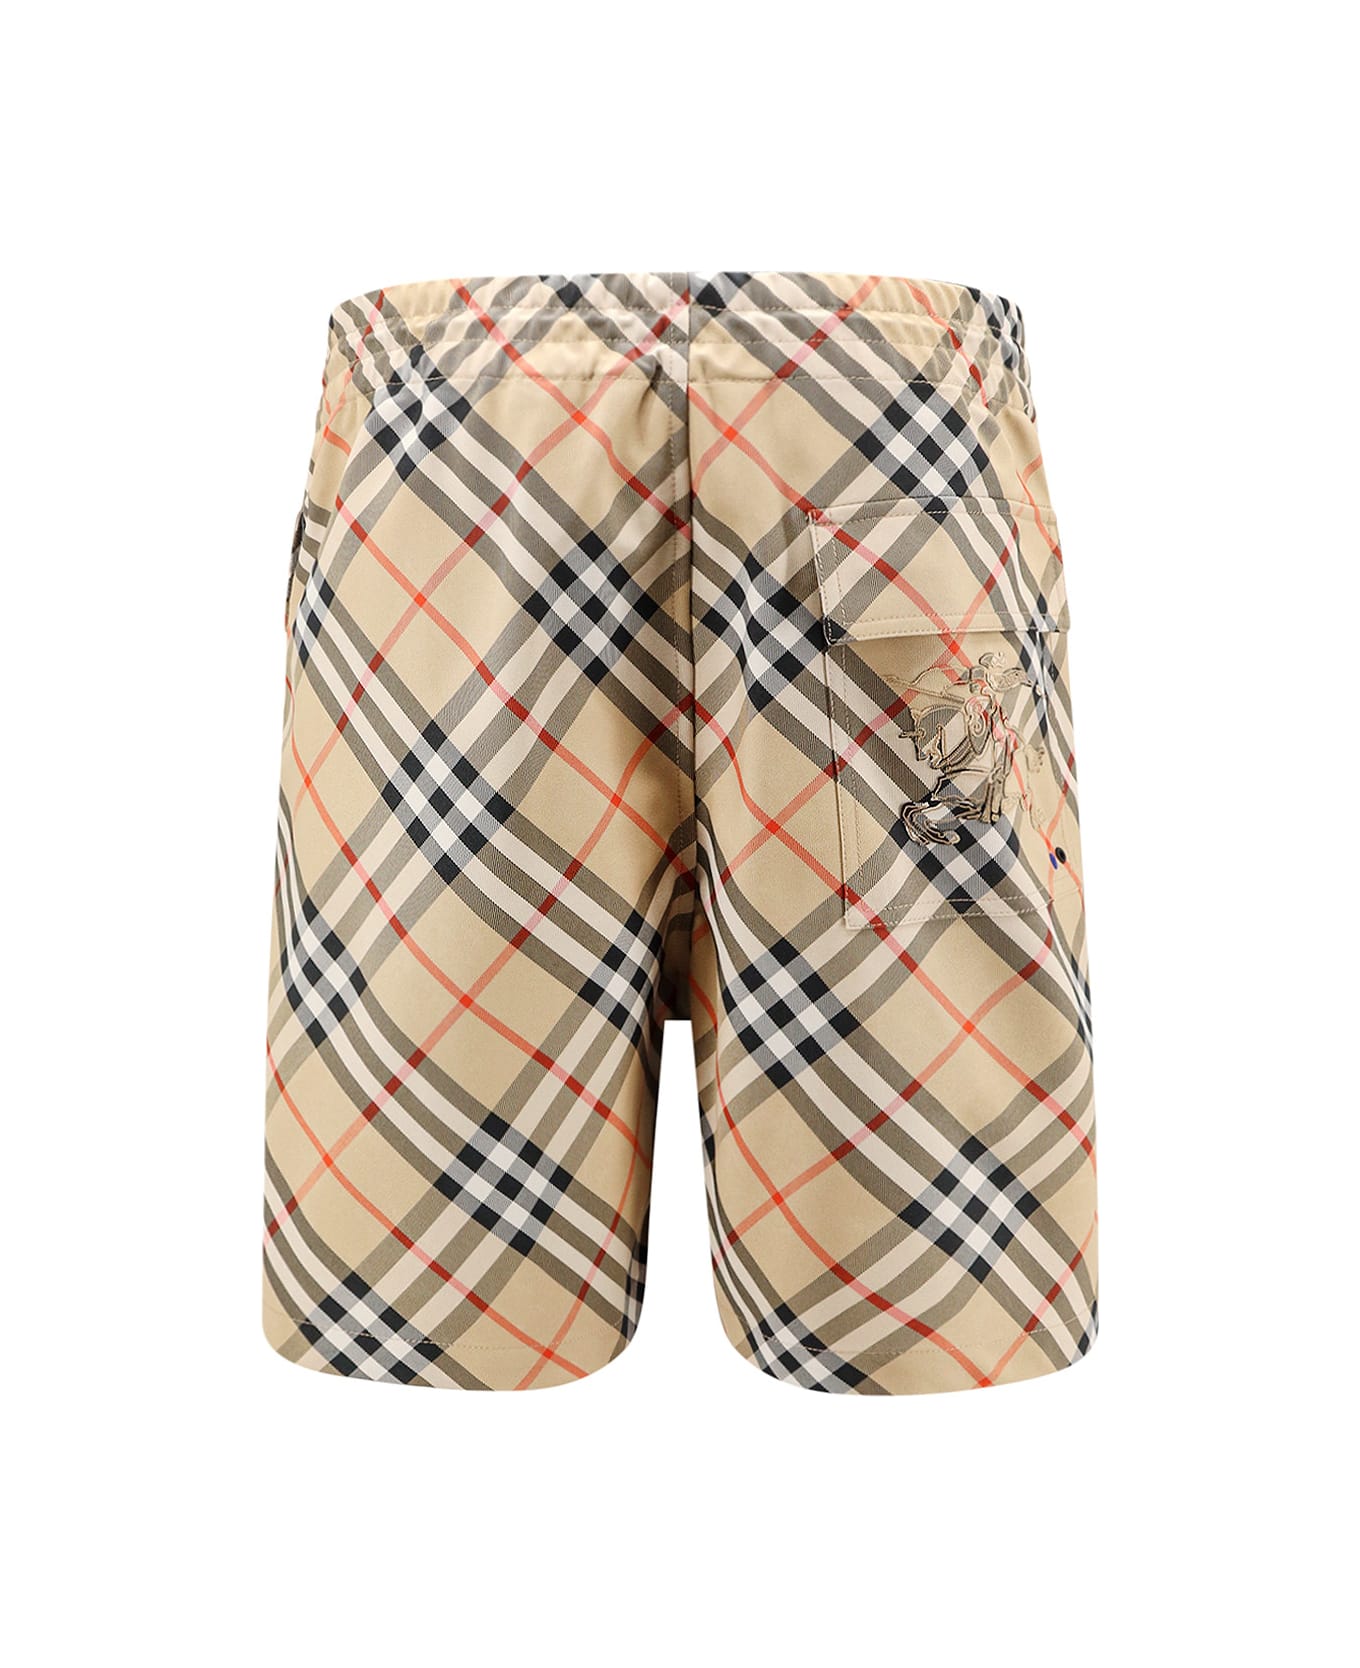 Burberry Bermuda Shorts - Beige